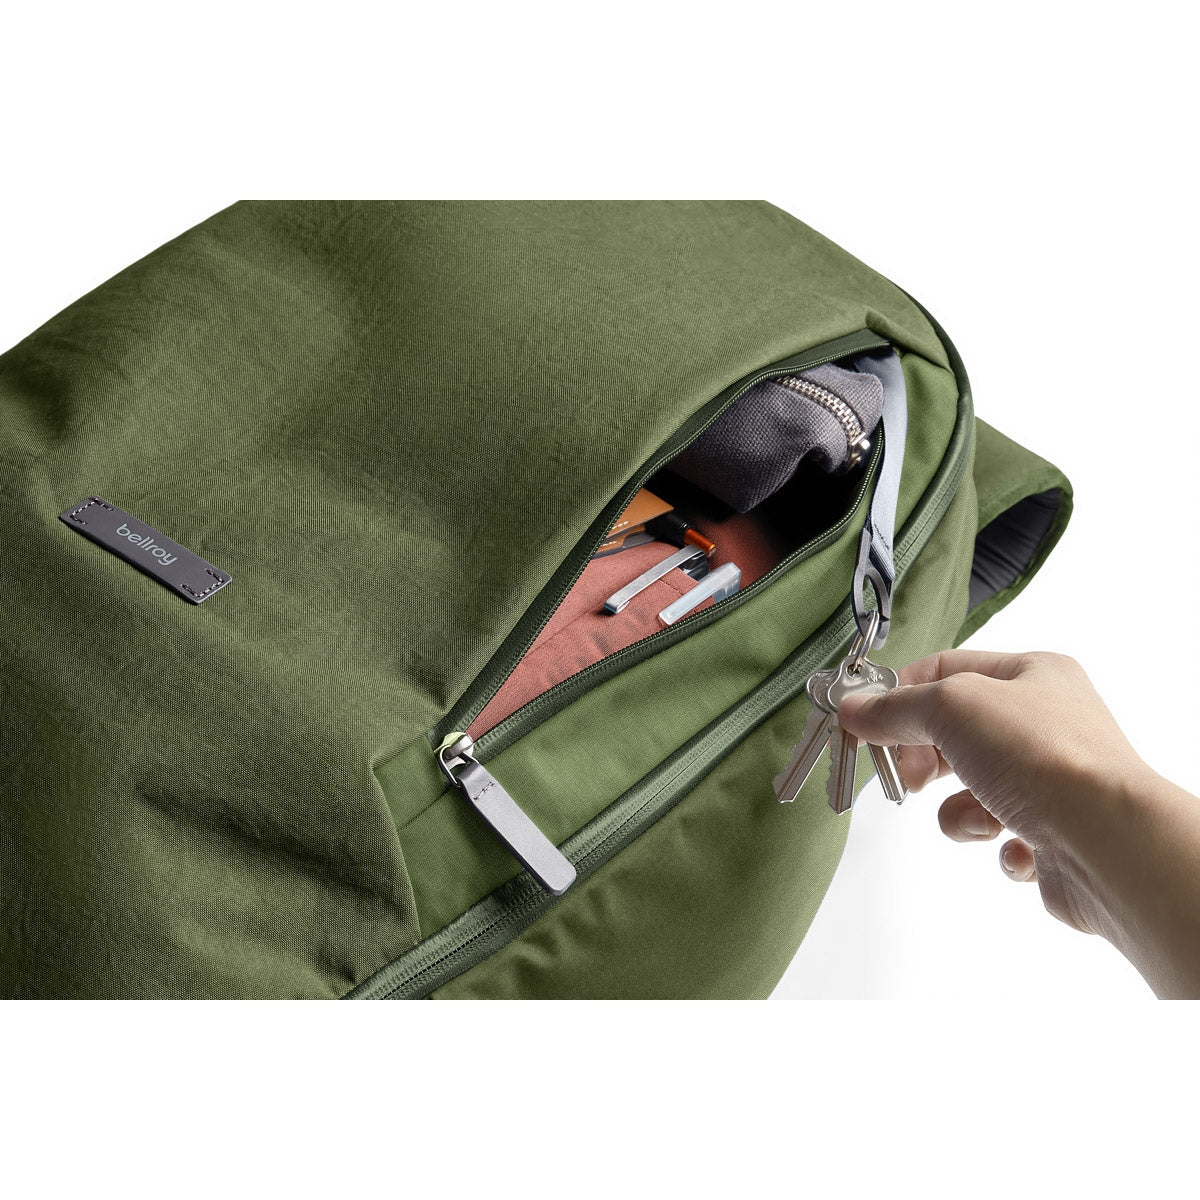 Bellroy Transit Backpack in Ranger Green